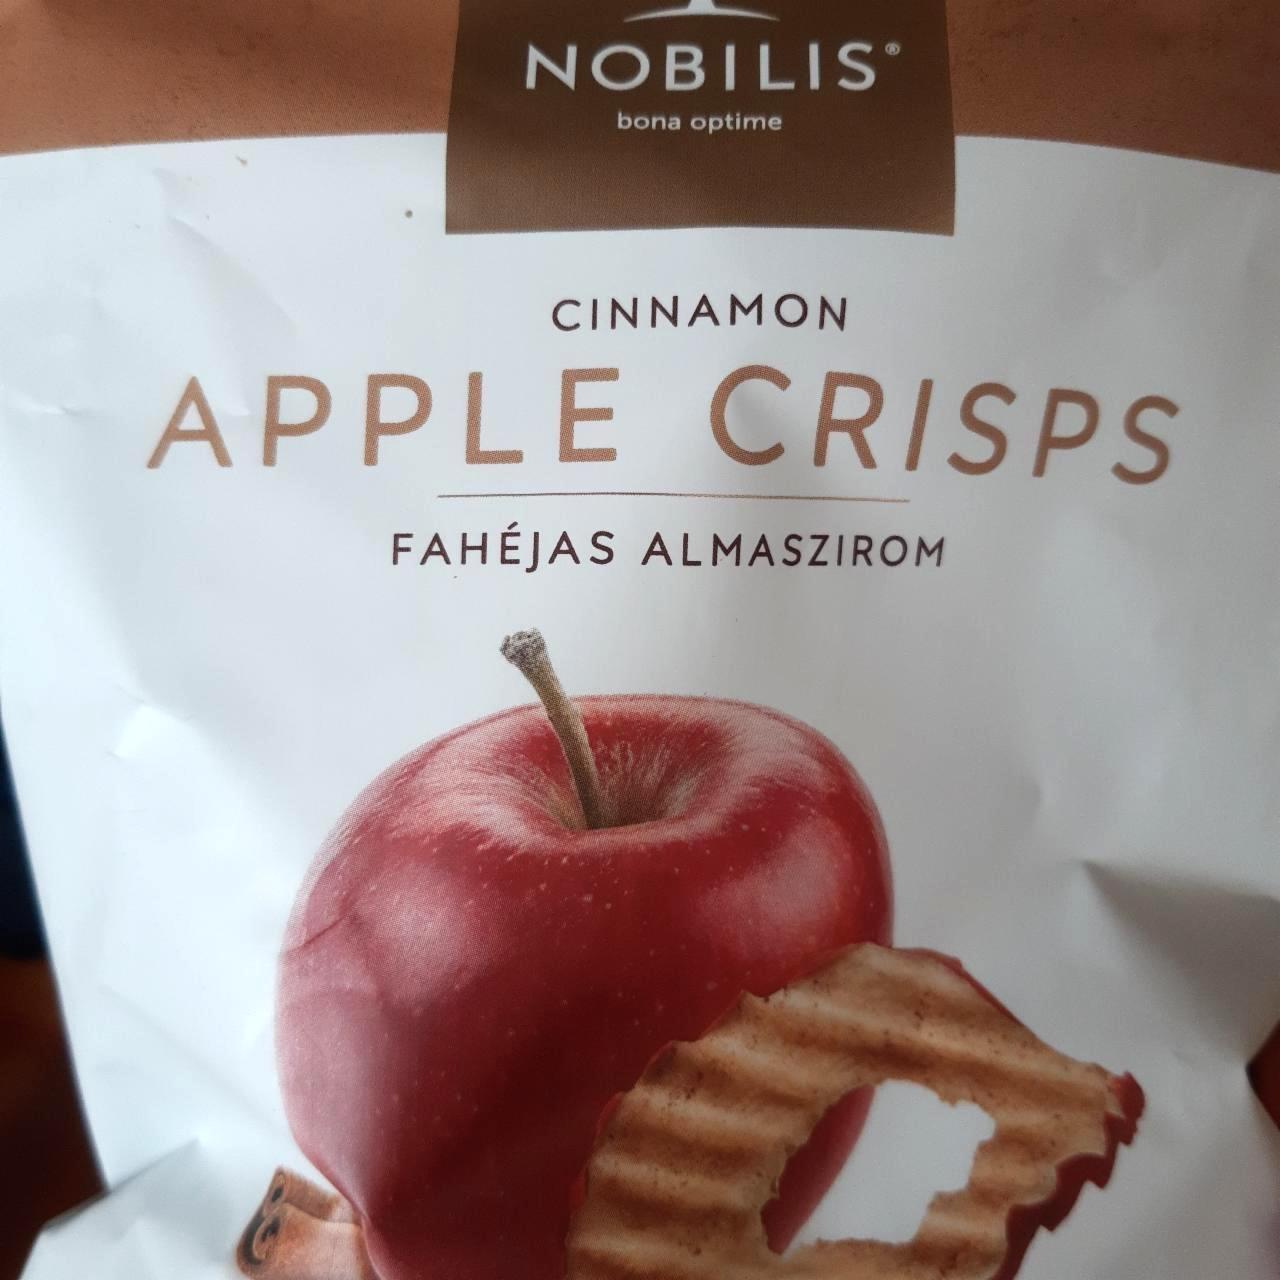 Fotografie - Cinnamon apple crisps Nobilis